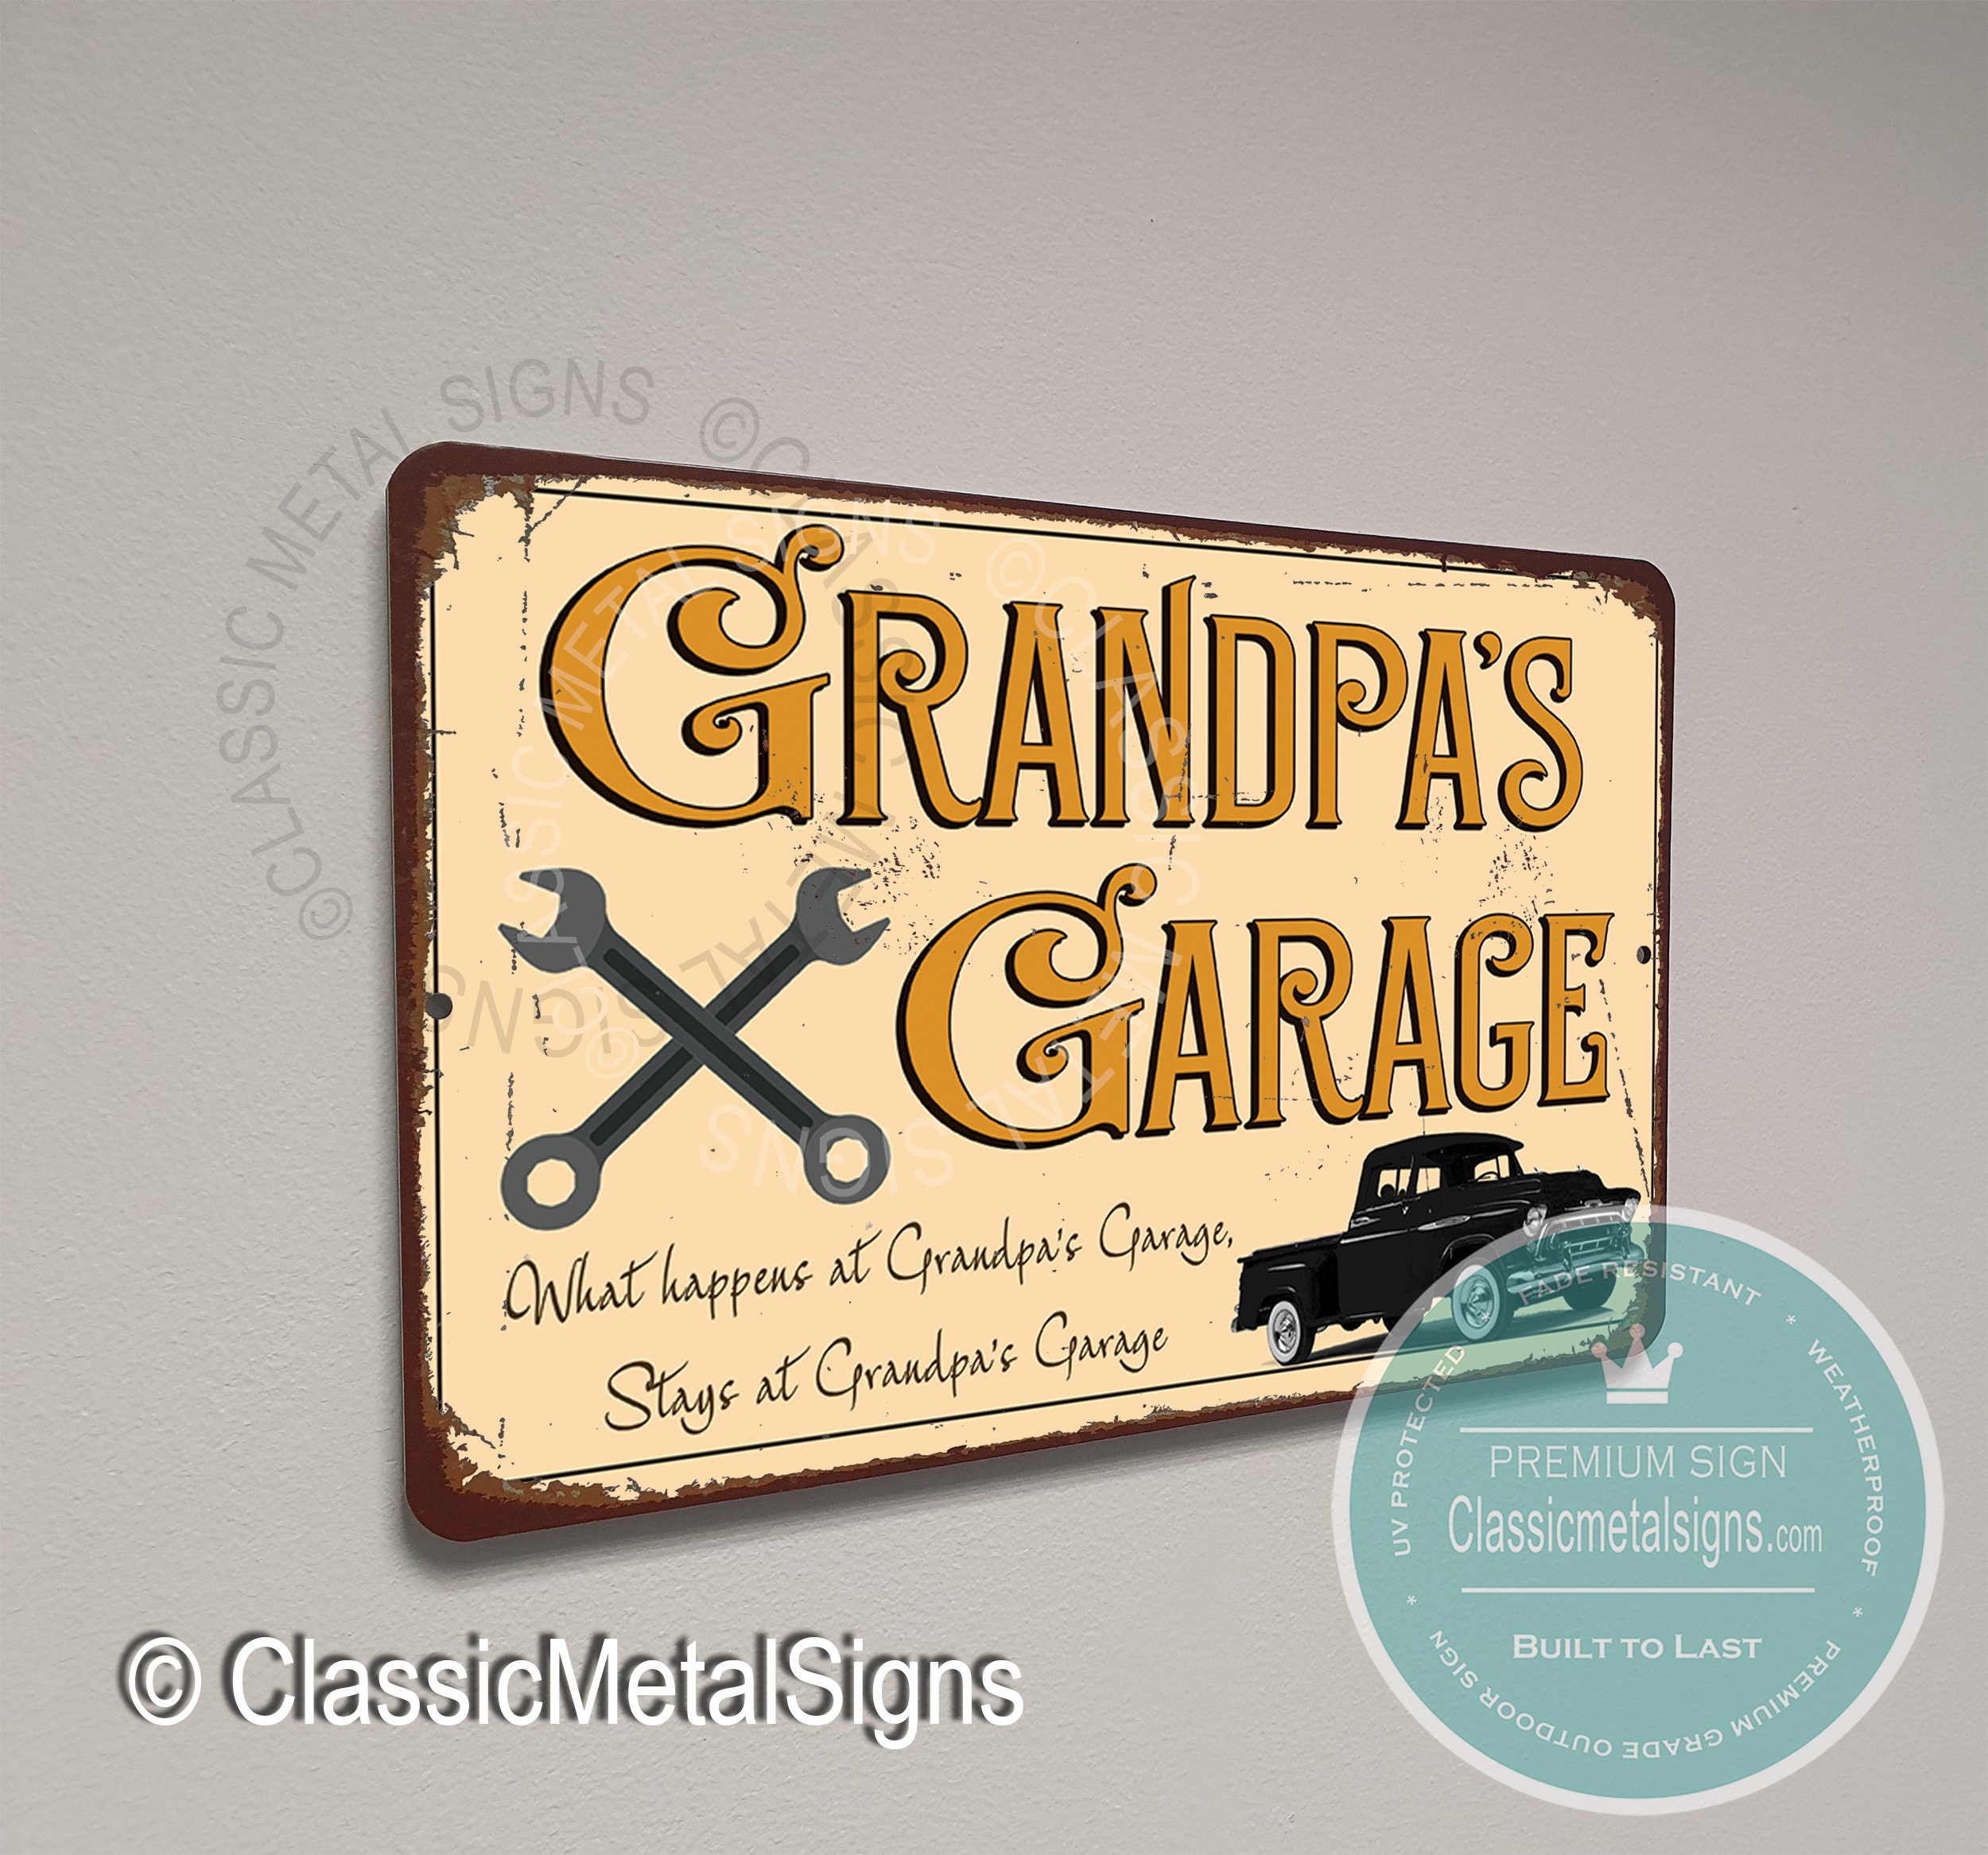 Gift for Papa- Wood shop- Garage sign - Vintage Style Sign - Man